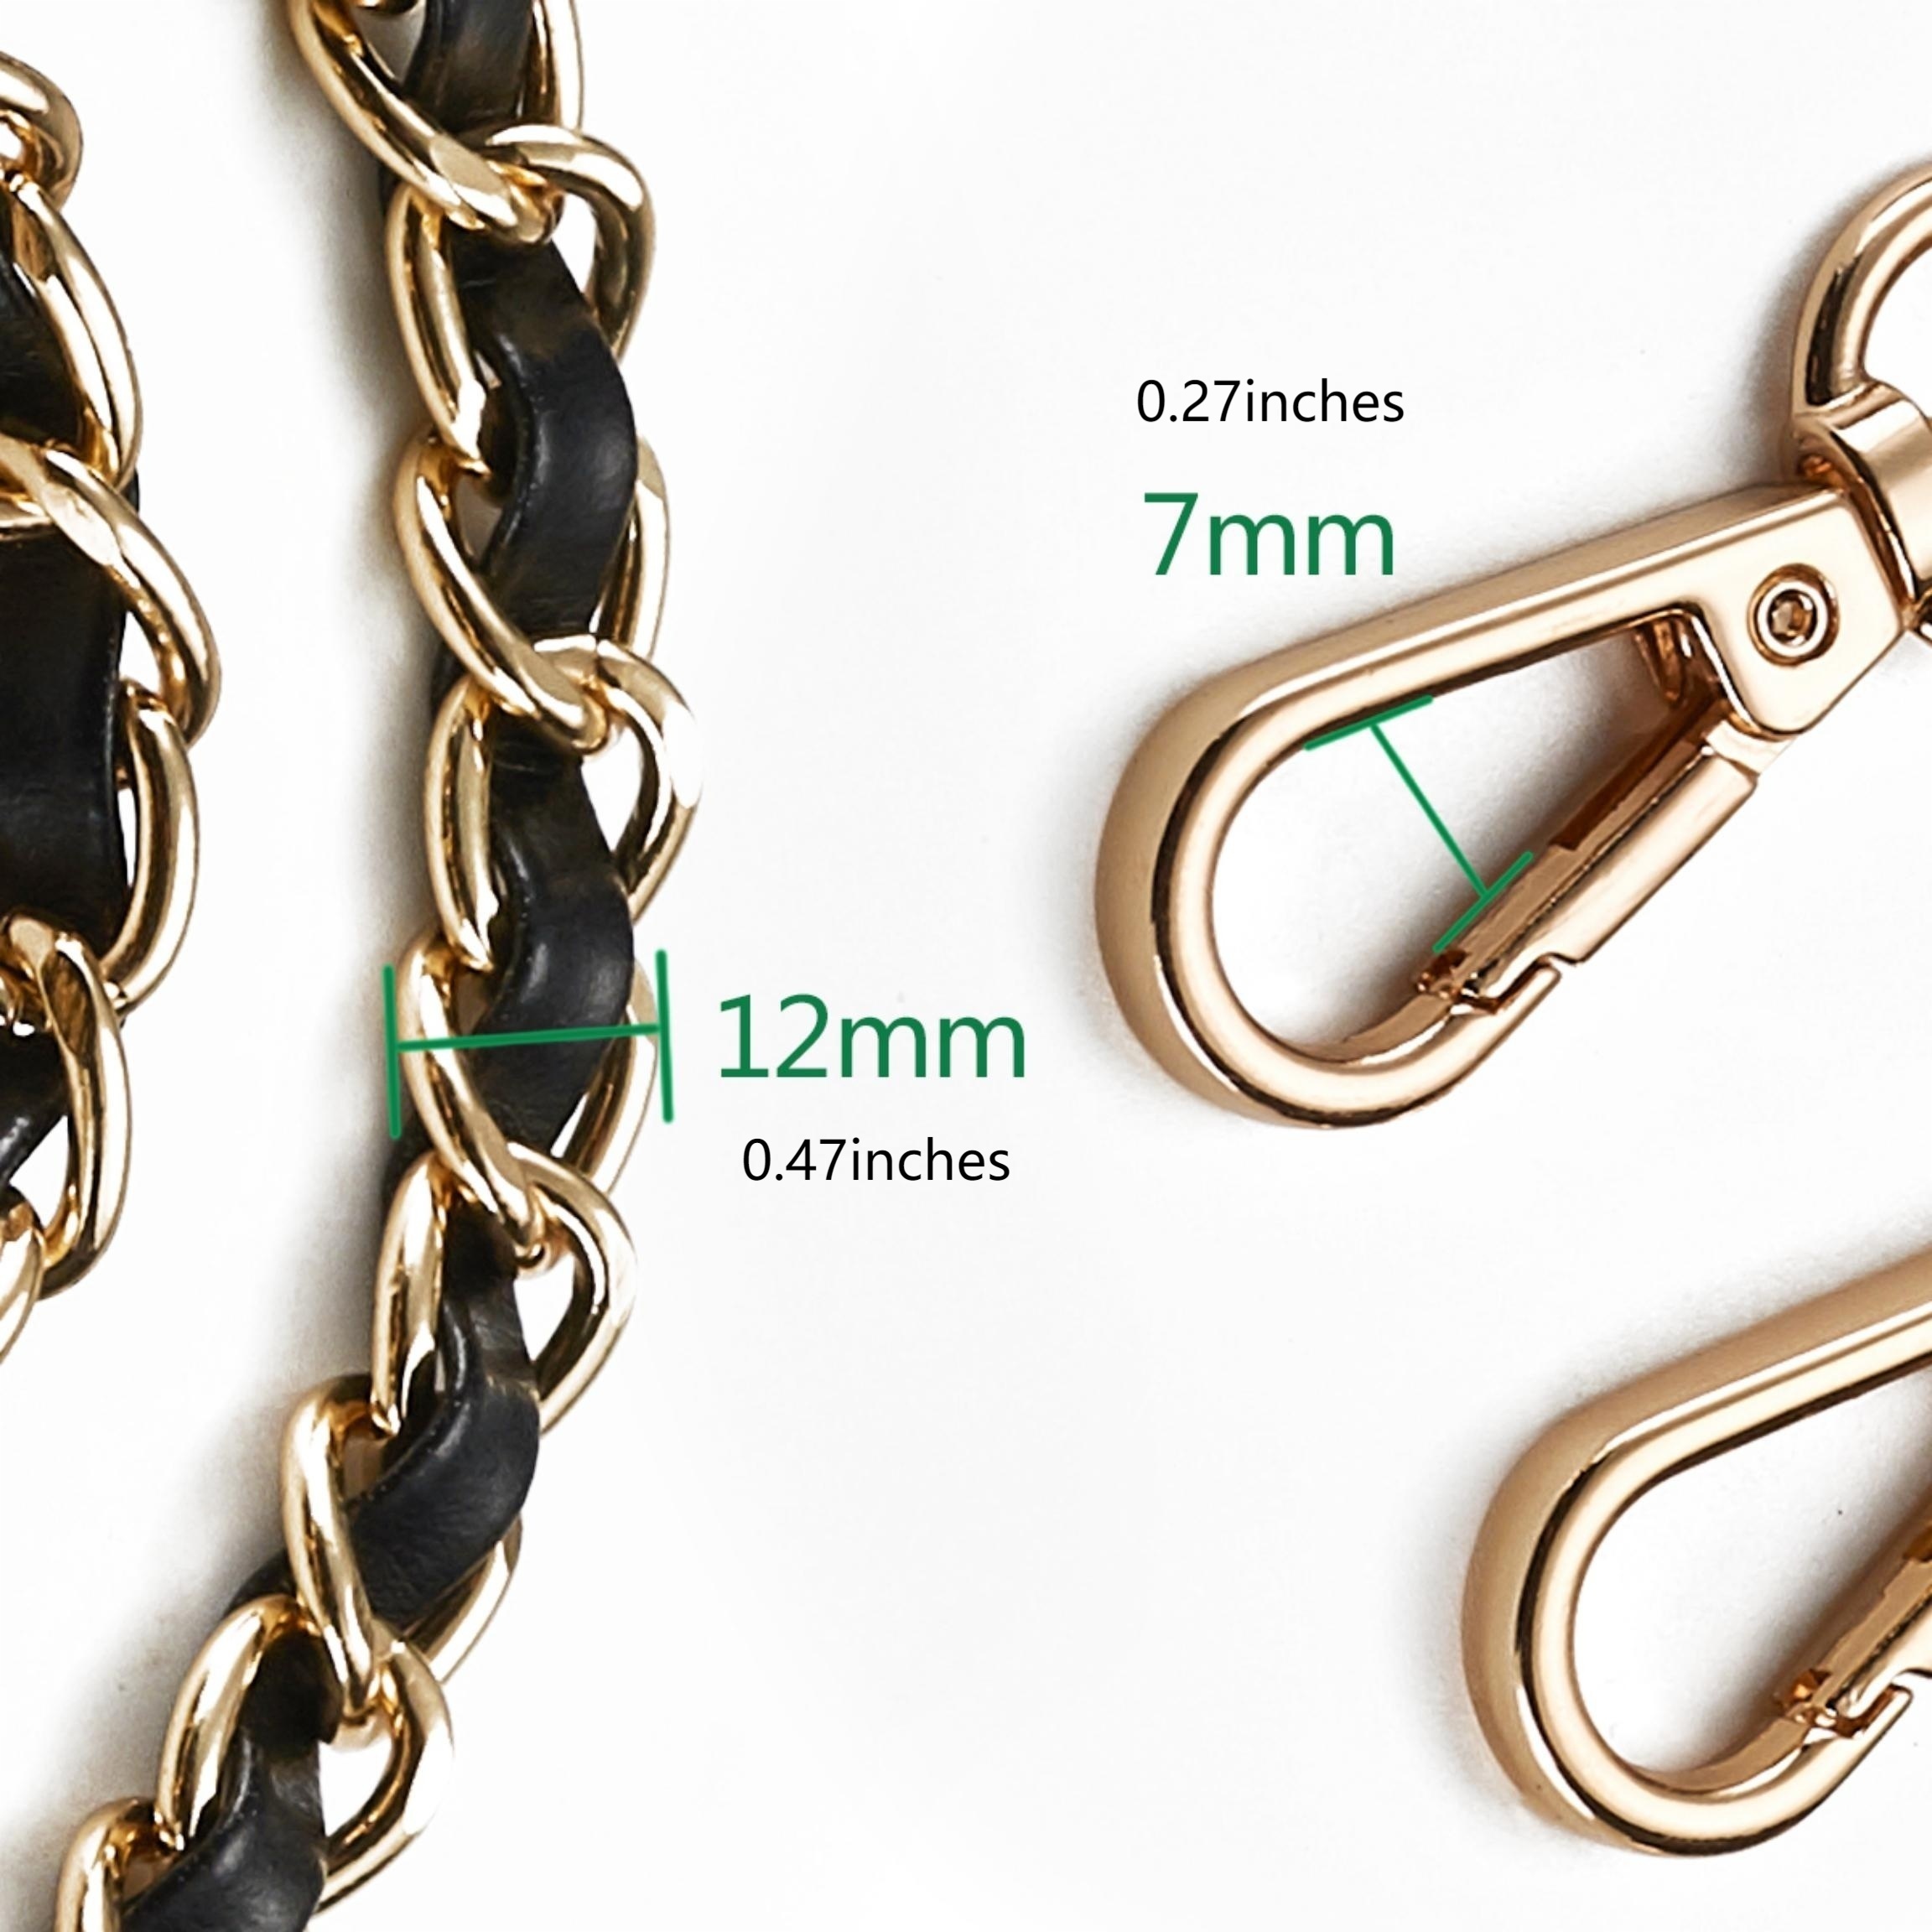 Next Fashion Purse Chain Strap Handle Shoulder Crossbody Metal Replacement 20cm - 120cm Selecting (Gold, 8 / 20cm)